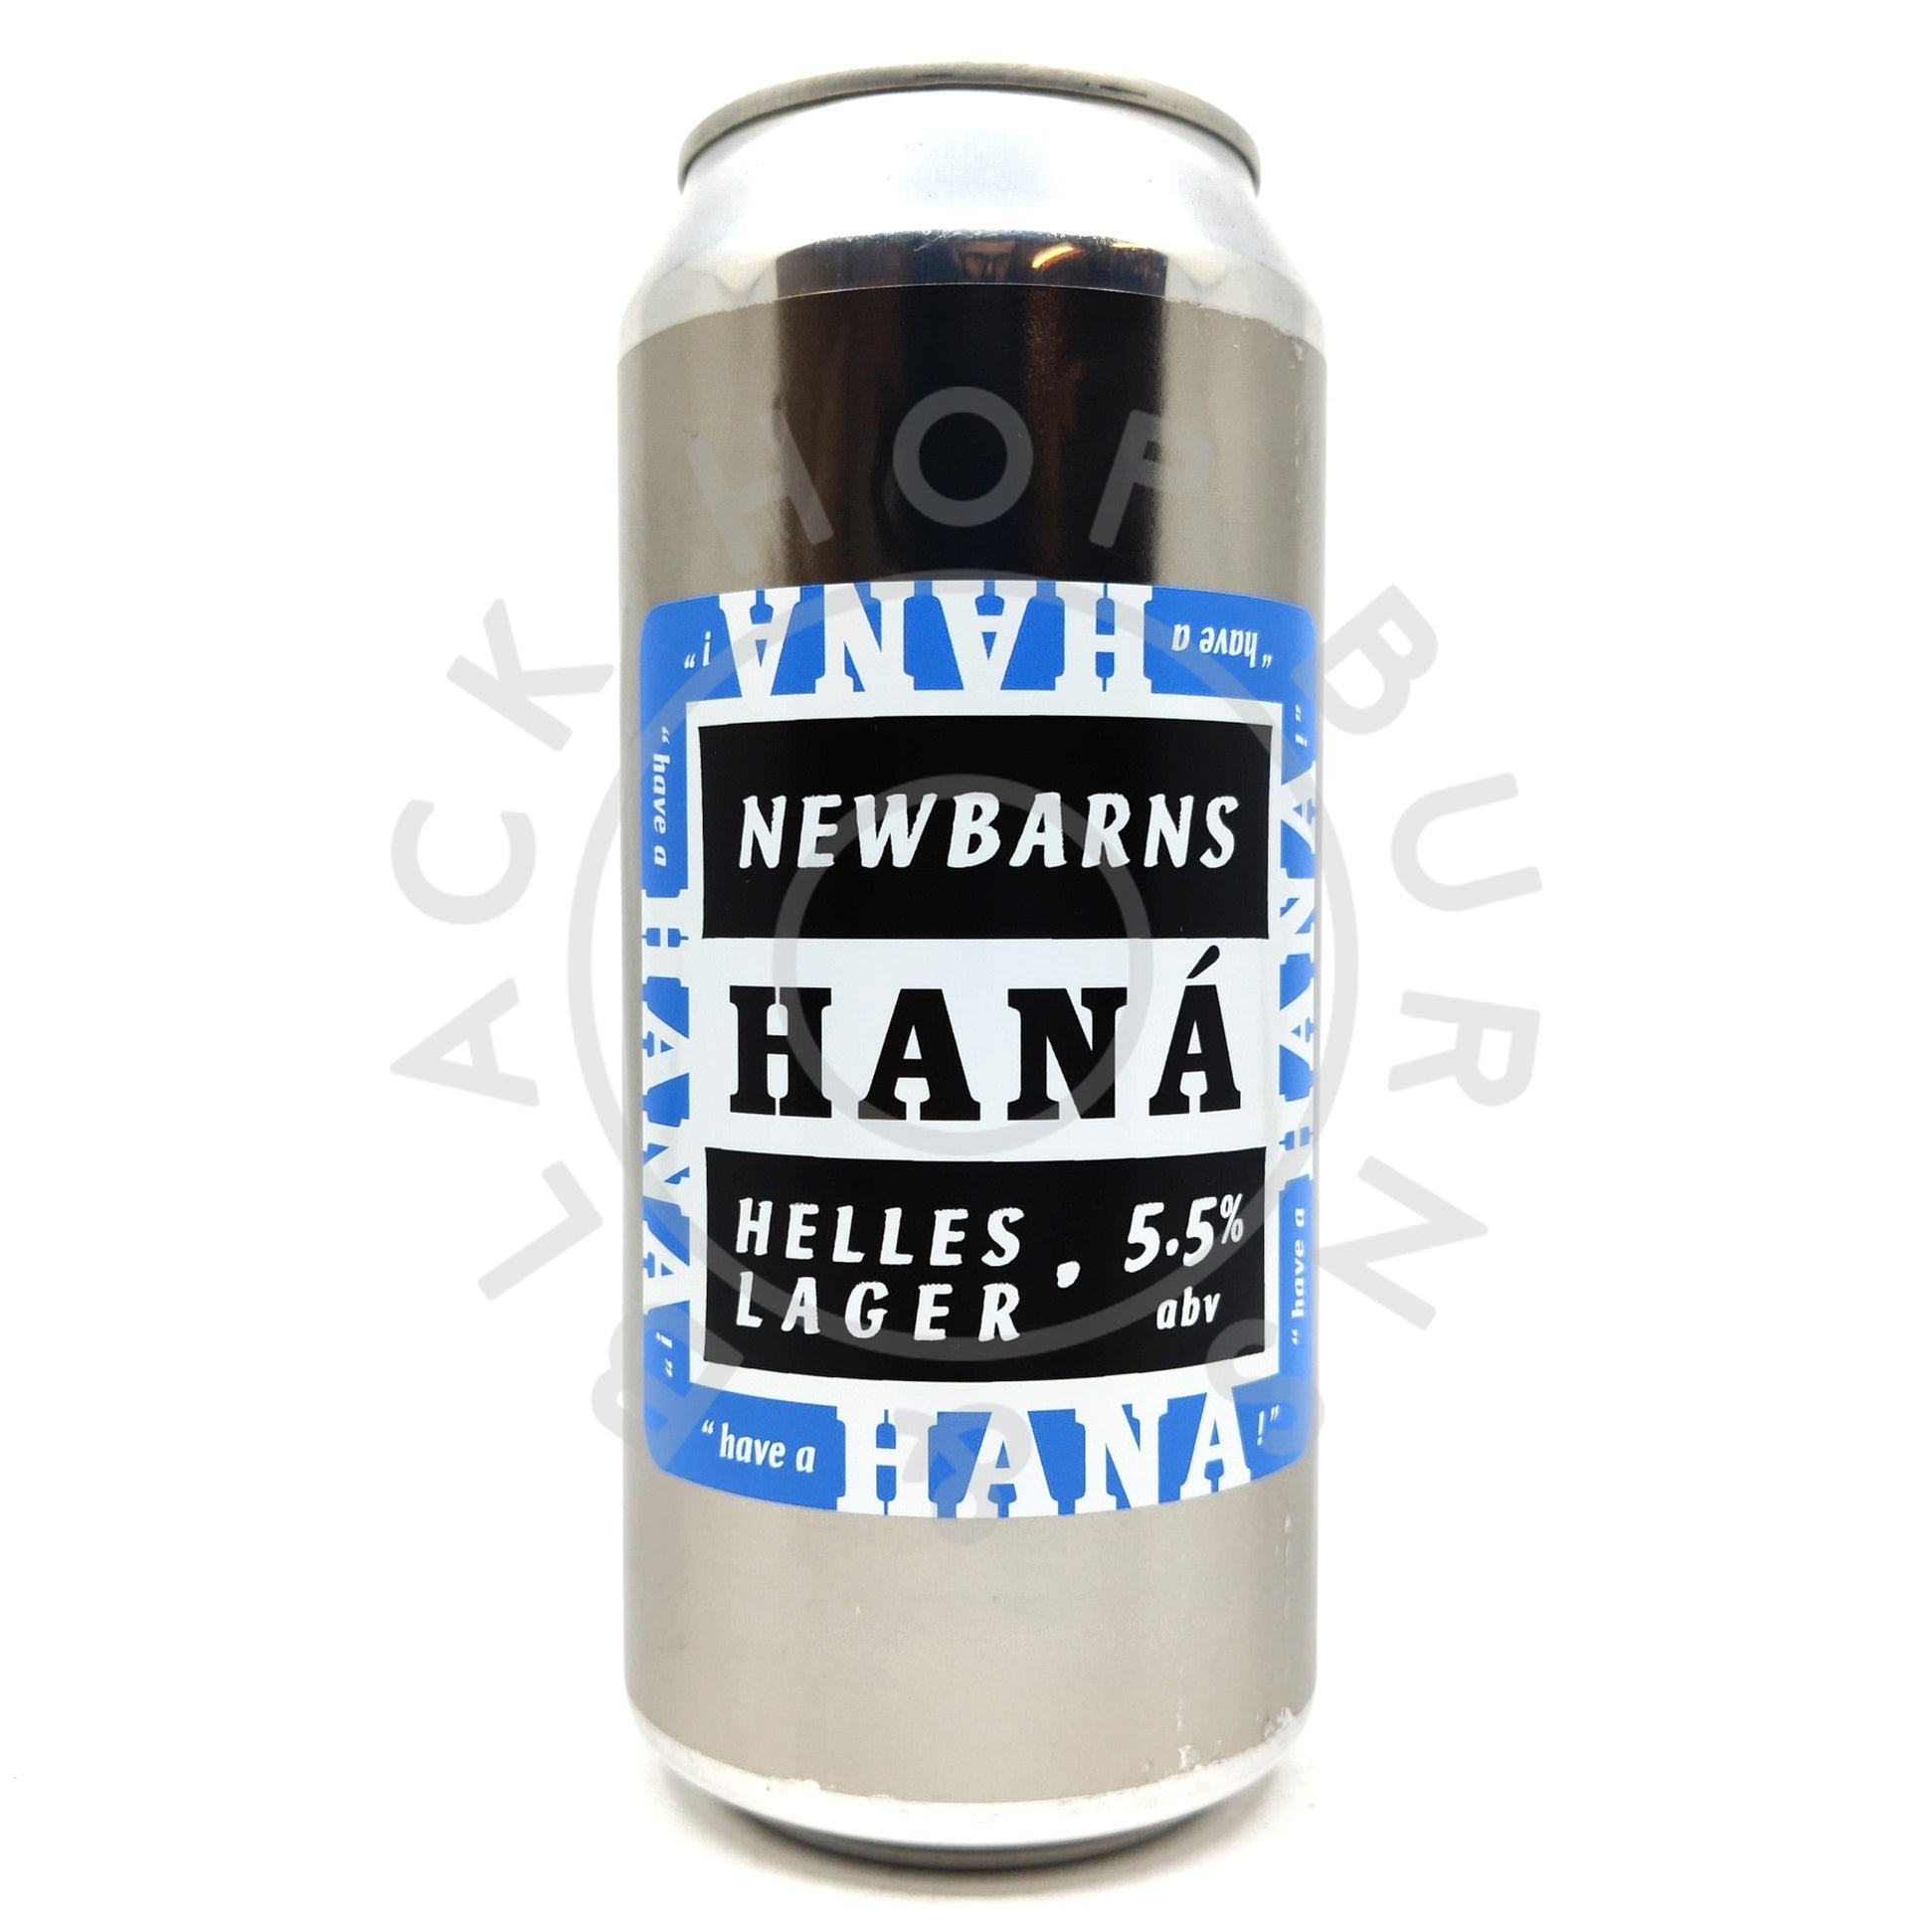 Newbarns Hana Helles Lager 5.5% (440ml can)-Hop Burns & Black